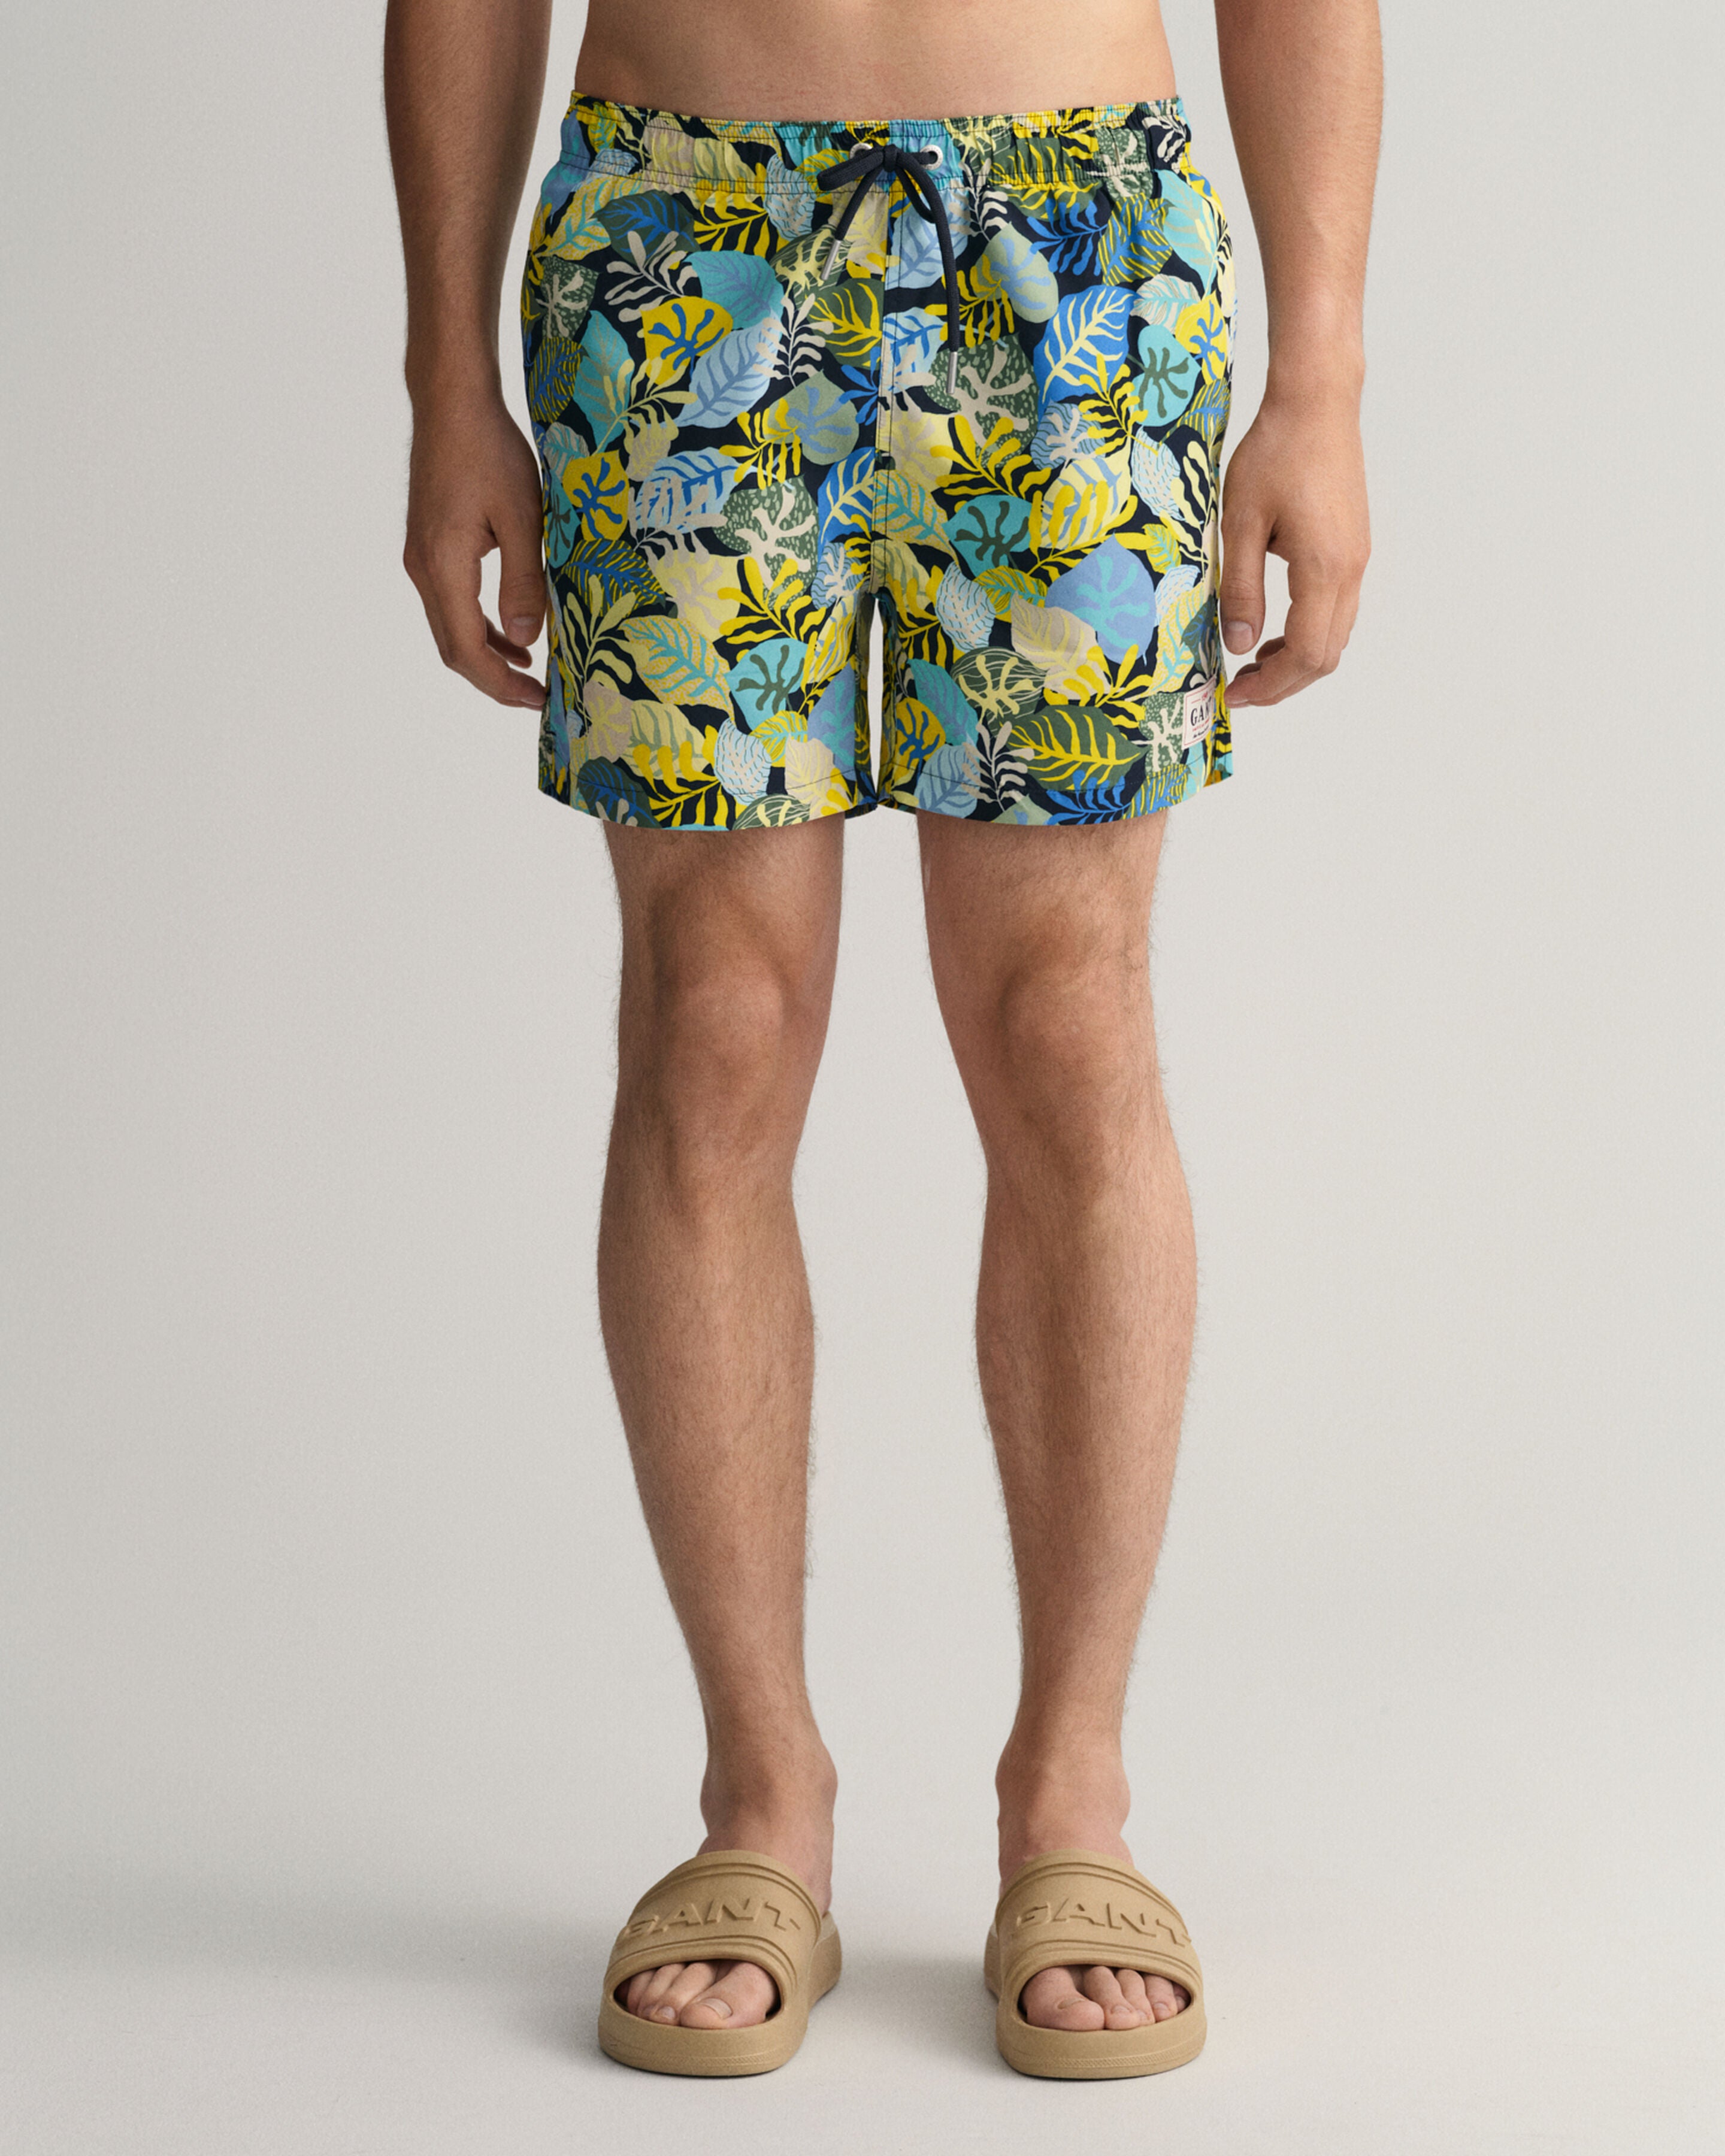 GANT - Classic Fit Tropical Print Swim Shorts In Marine 922316012 410